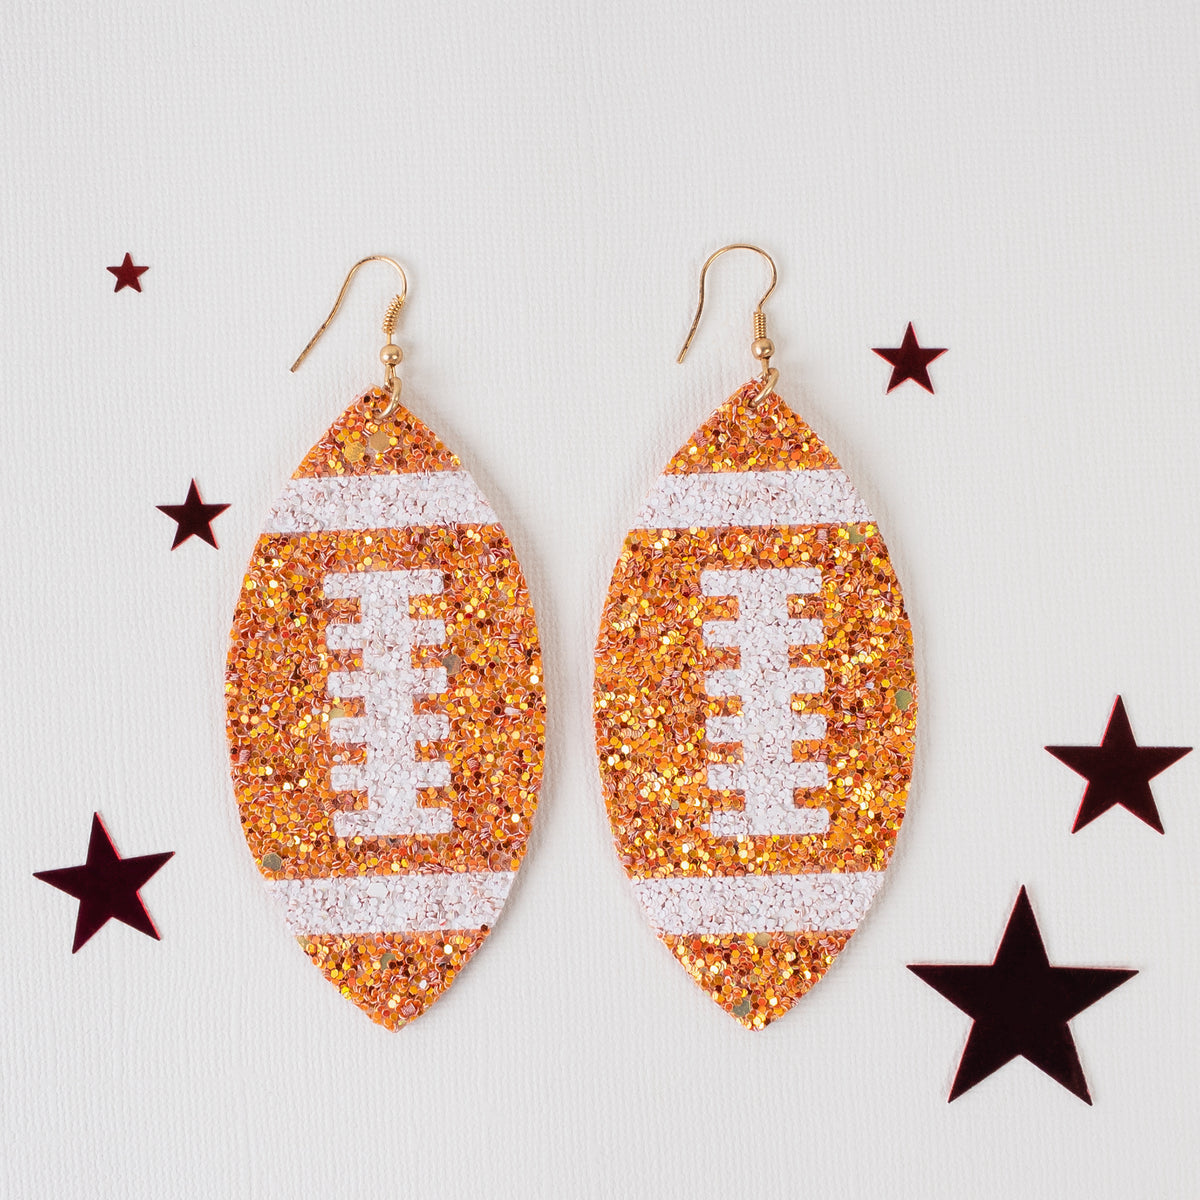 73874 - Football Earrings - Orange - Fashion Jewelry Wholesale